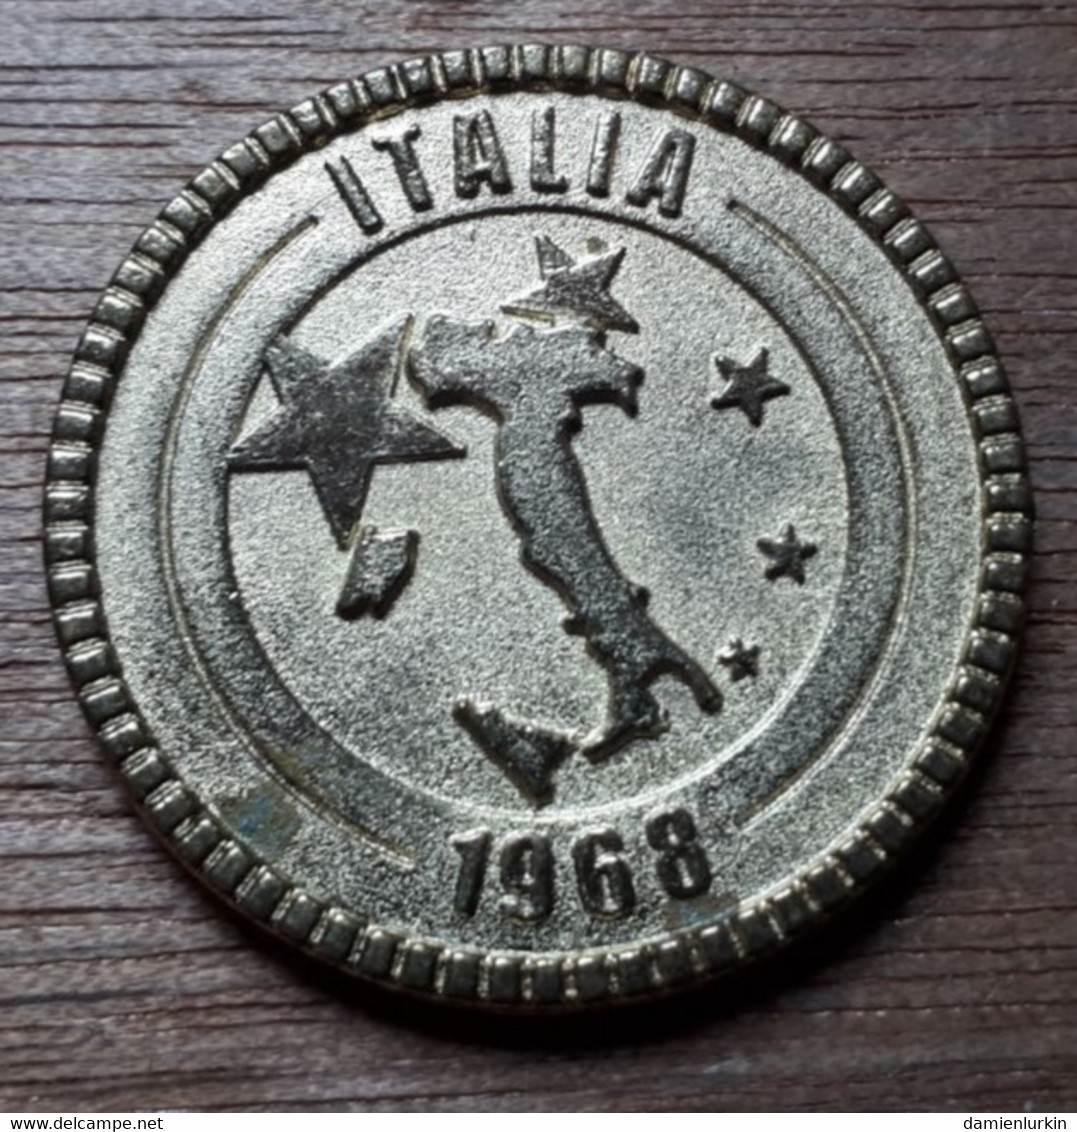 FRANCE MAGICGOAL2000 FOOTBALL ITALIE ITALY ITALIA 1968 - Firma's